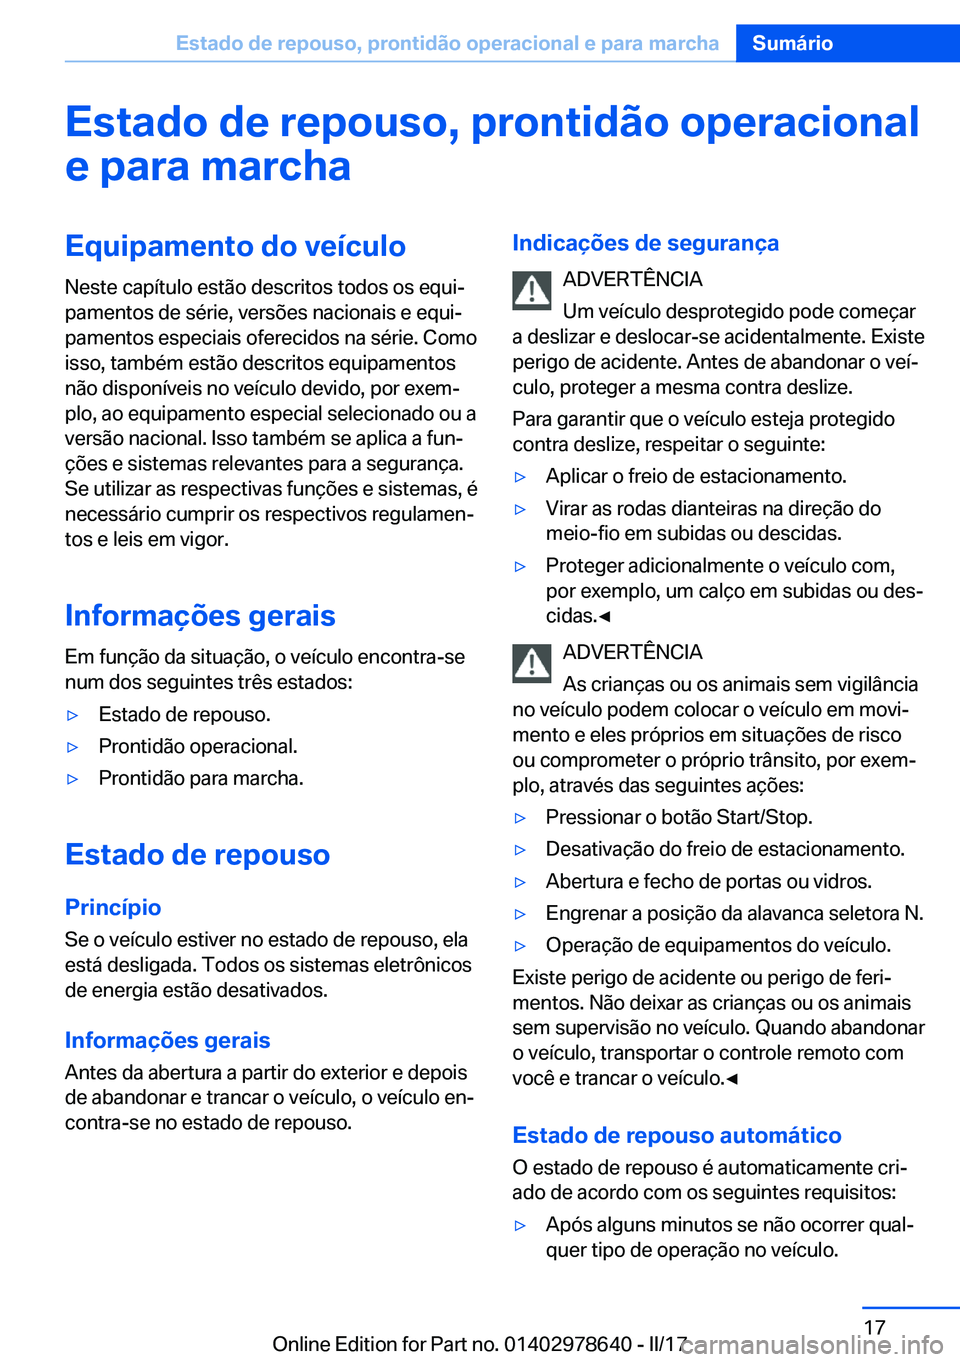 BMW 7 SERIES 2018  Manual do condutor (in Portuguese) �E�s�t�a�d�o��d�e��r�e�p�o�u�s�o�,��p�r�o�n�t�i�d�ã�o��o�p�e�r�a�c�i�o�n�a�l
�e��p�a�r�a��m�a�r�c�h�a�E�q�u�i�p�a�m�e�n�t�o��d�o��v�e�